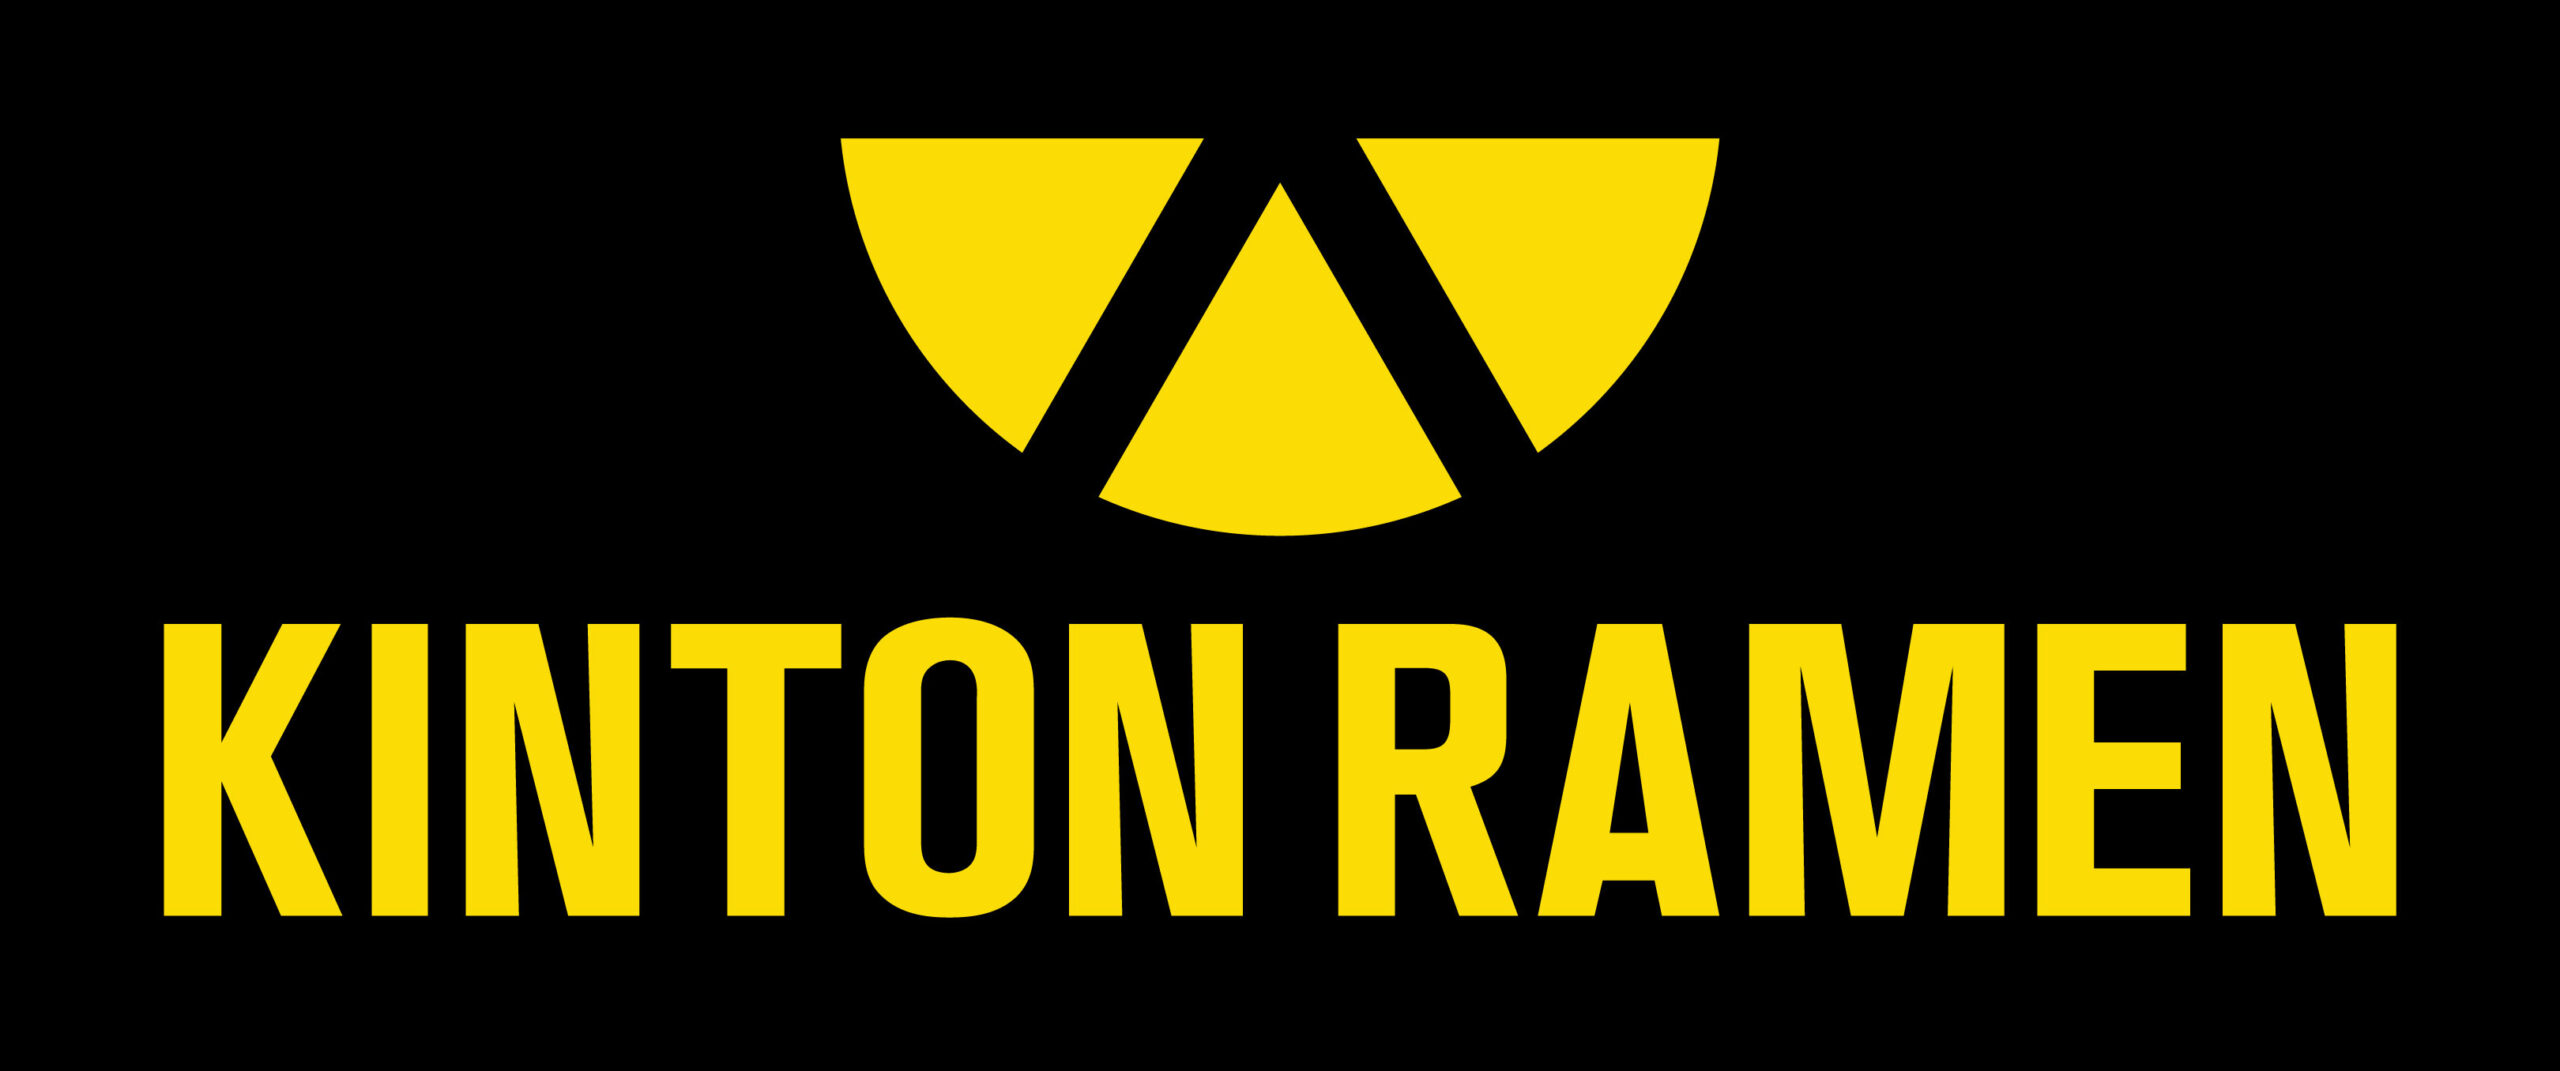 KINTON RAMEN logo